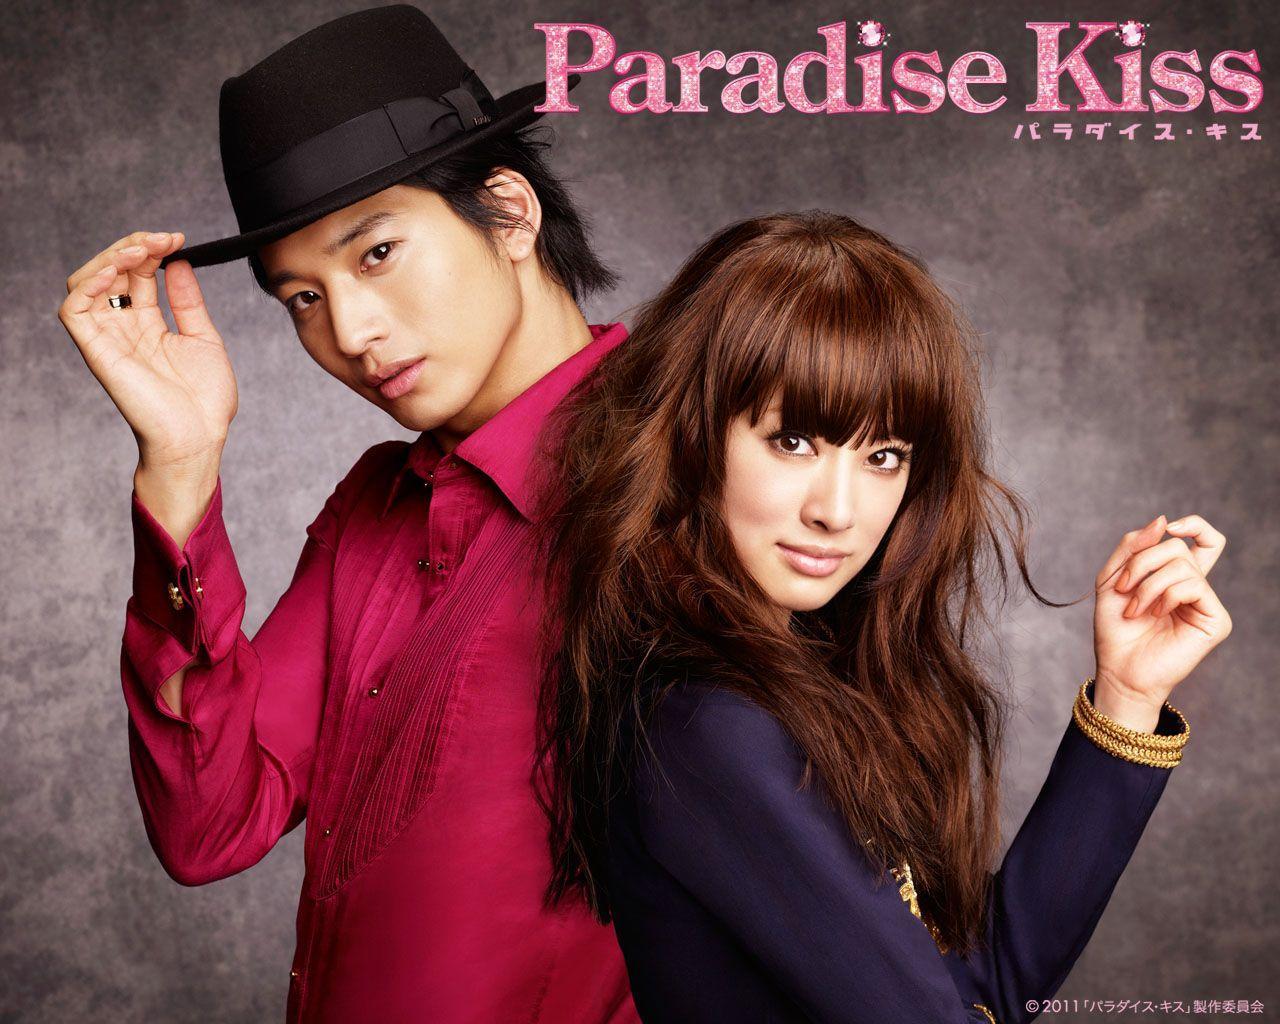 best image about paradise kiss. Studios, Posts